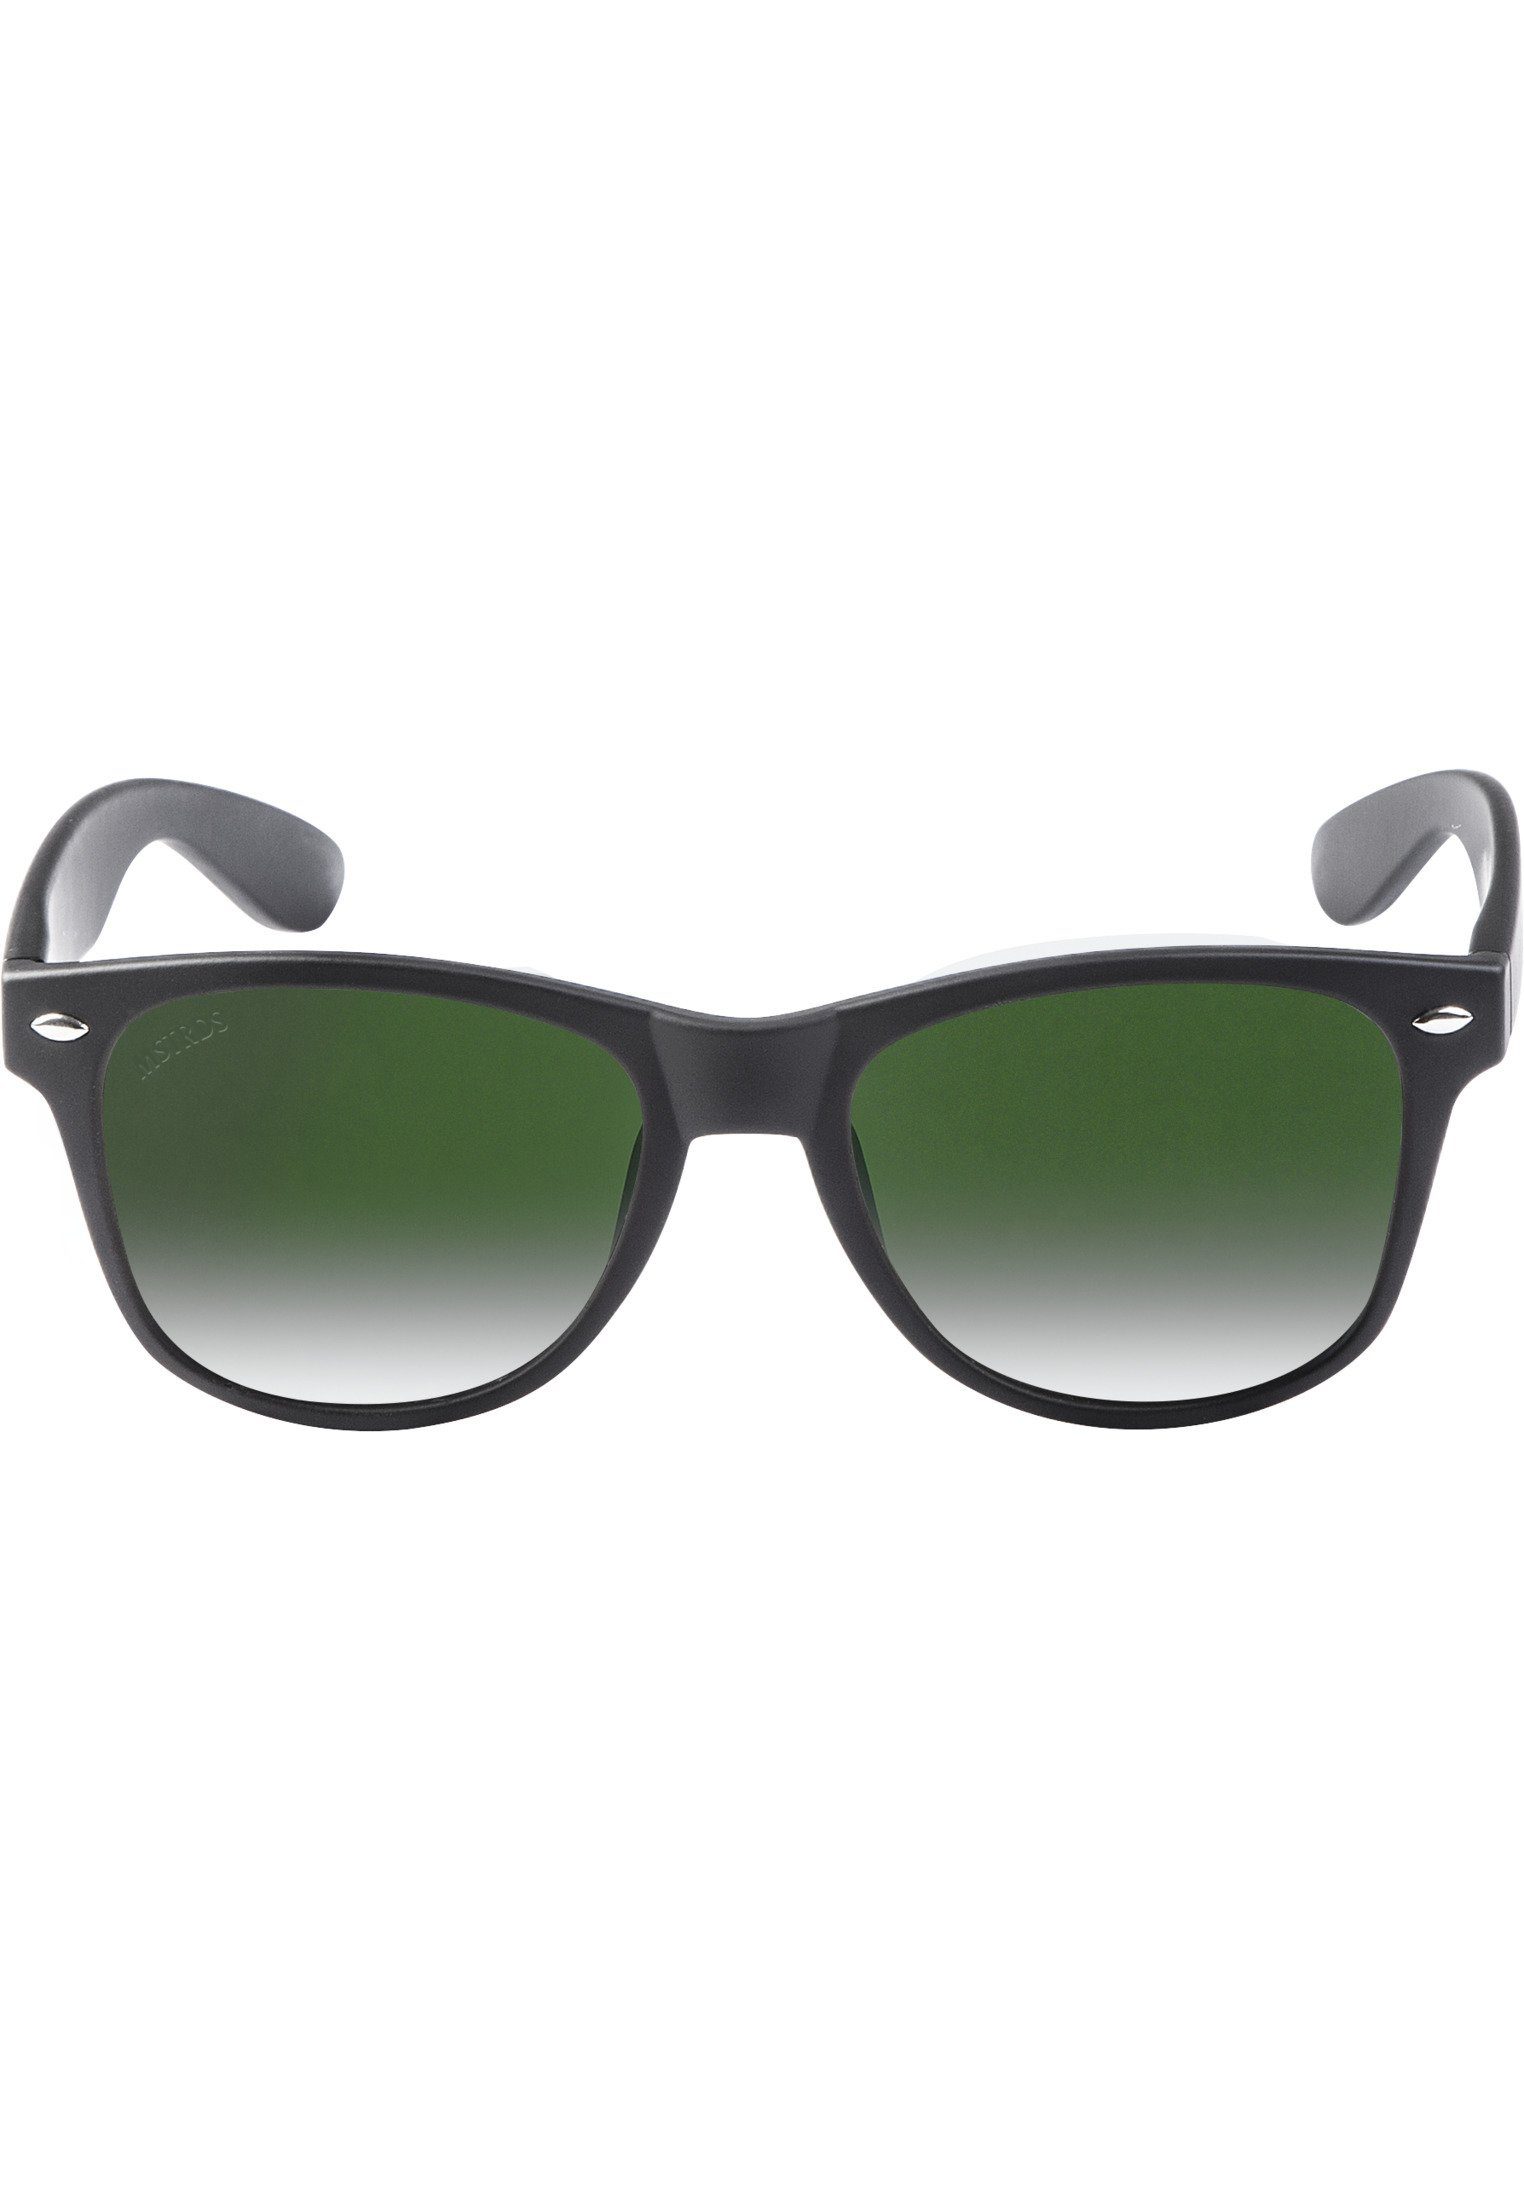 MSTRDS Sonnenbrille Accessoires Sunglasses Likoma Youth blk/grn